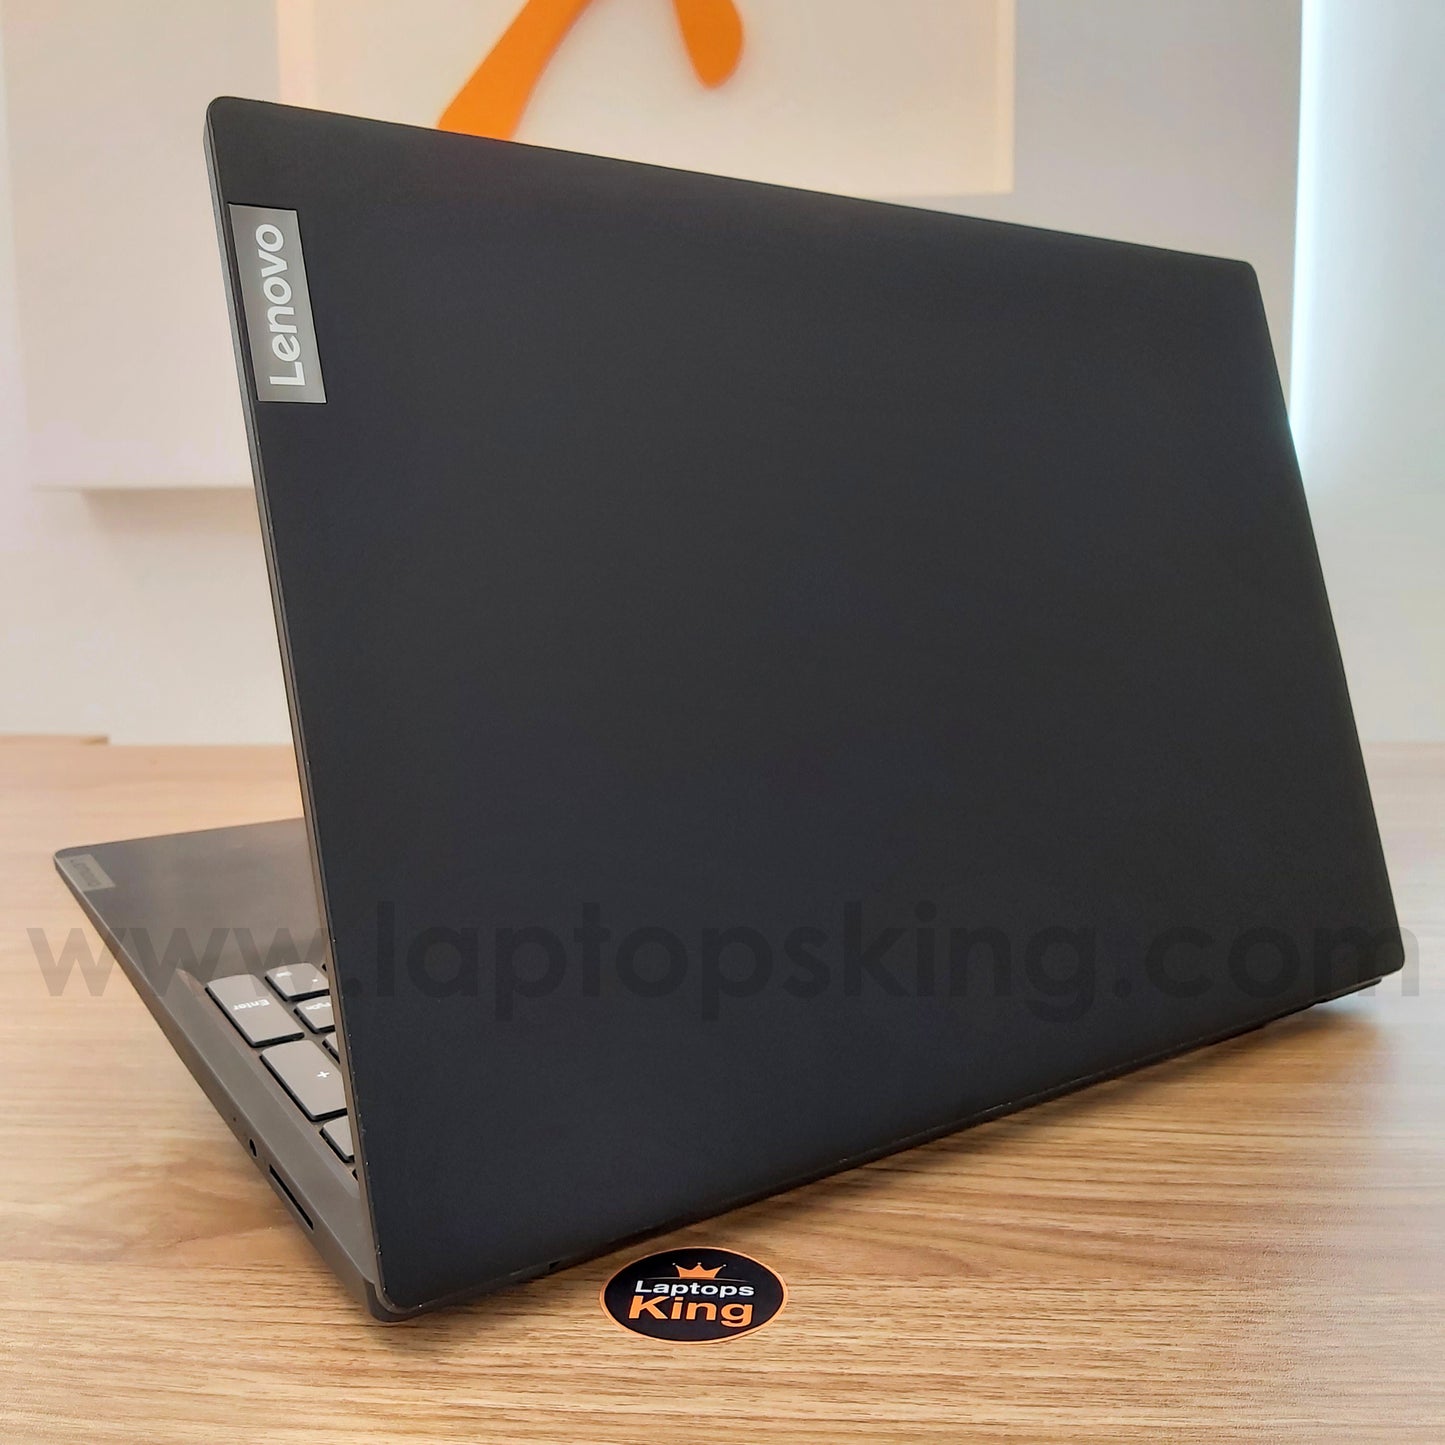 Lenovo IdeaPad S145 81W8 i5-1035G1 Laptop (Used Very Clean)